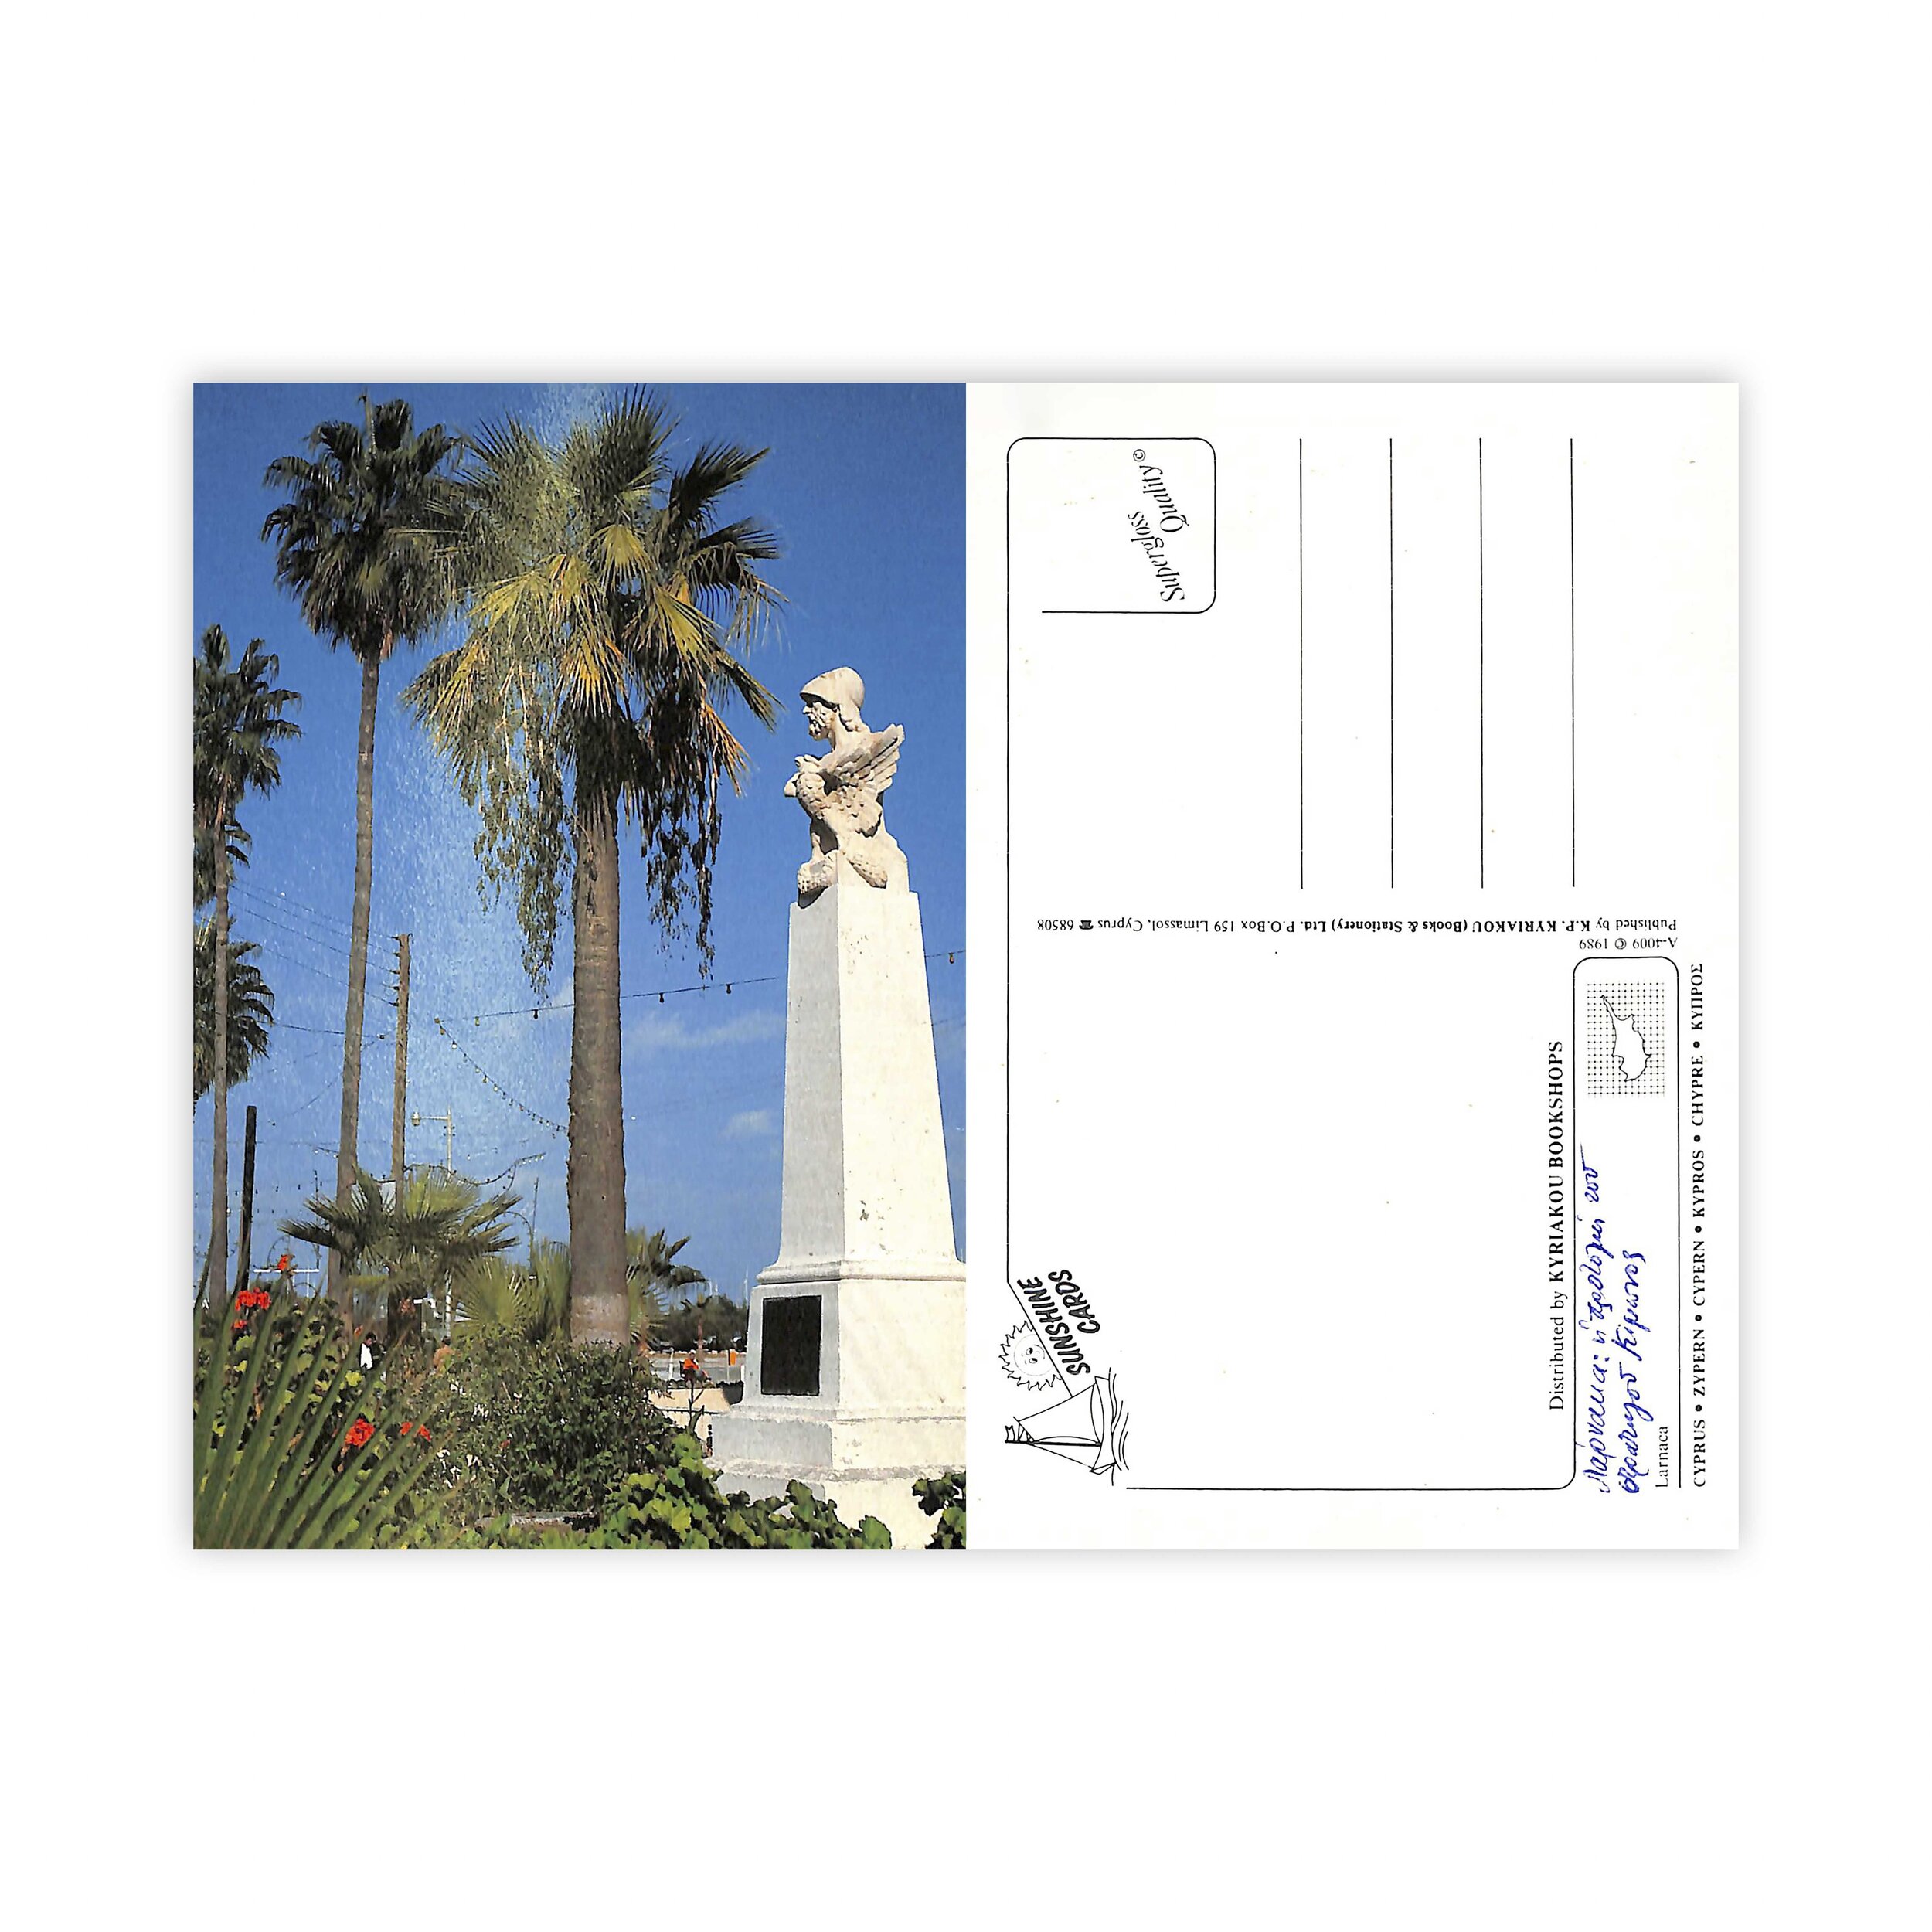  Bust of general Kimon, Post-card, Pier - Larnaca, 1980s 